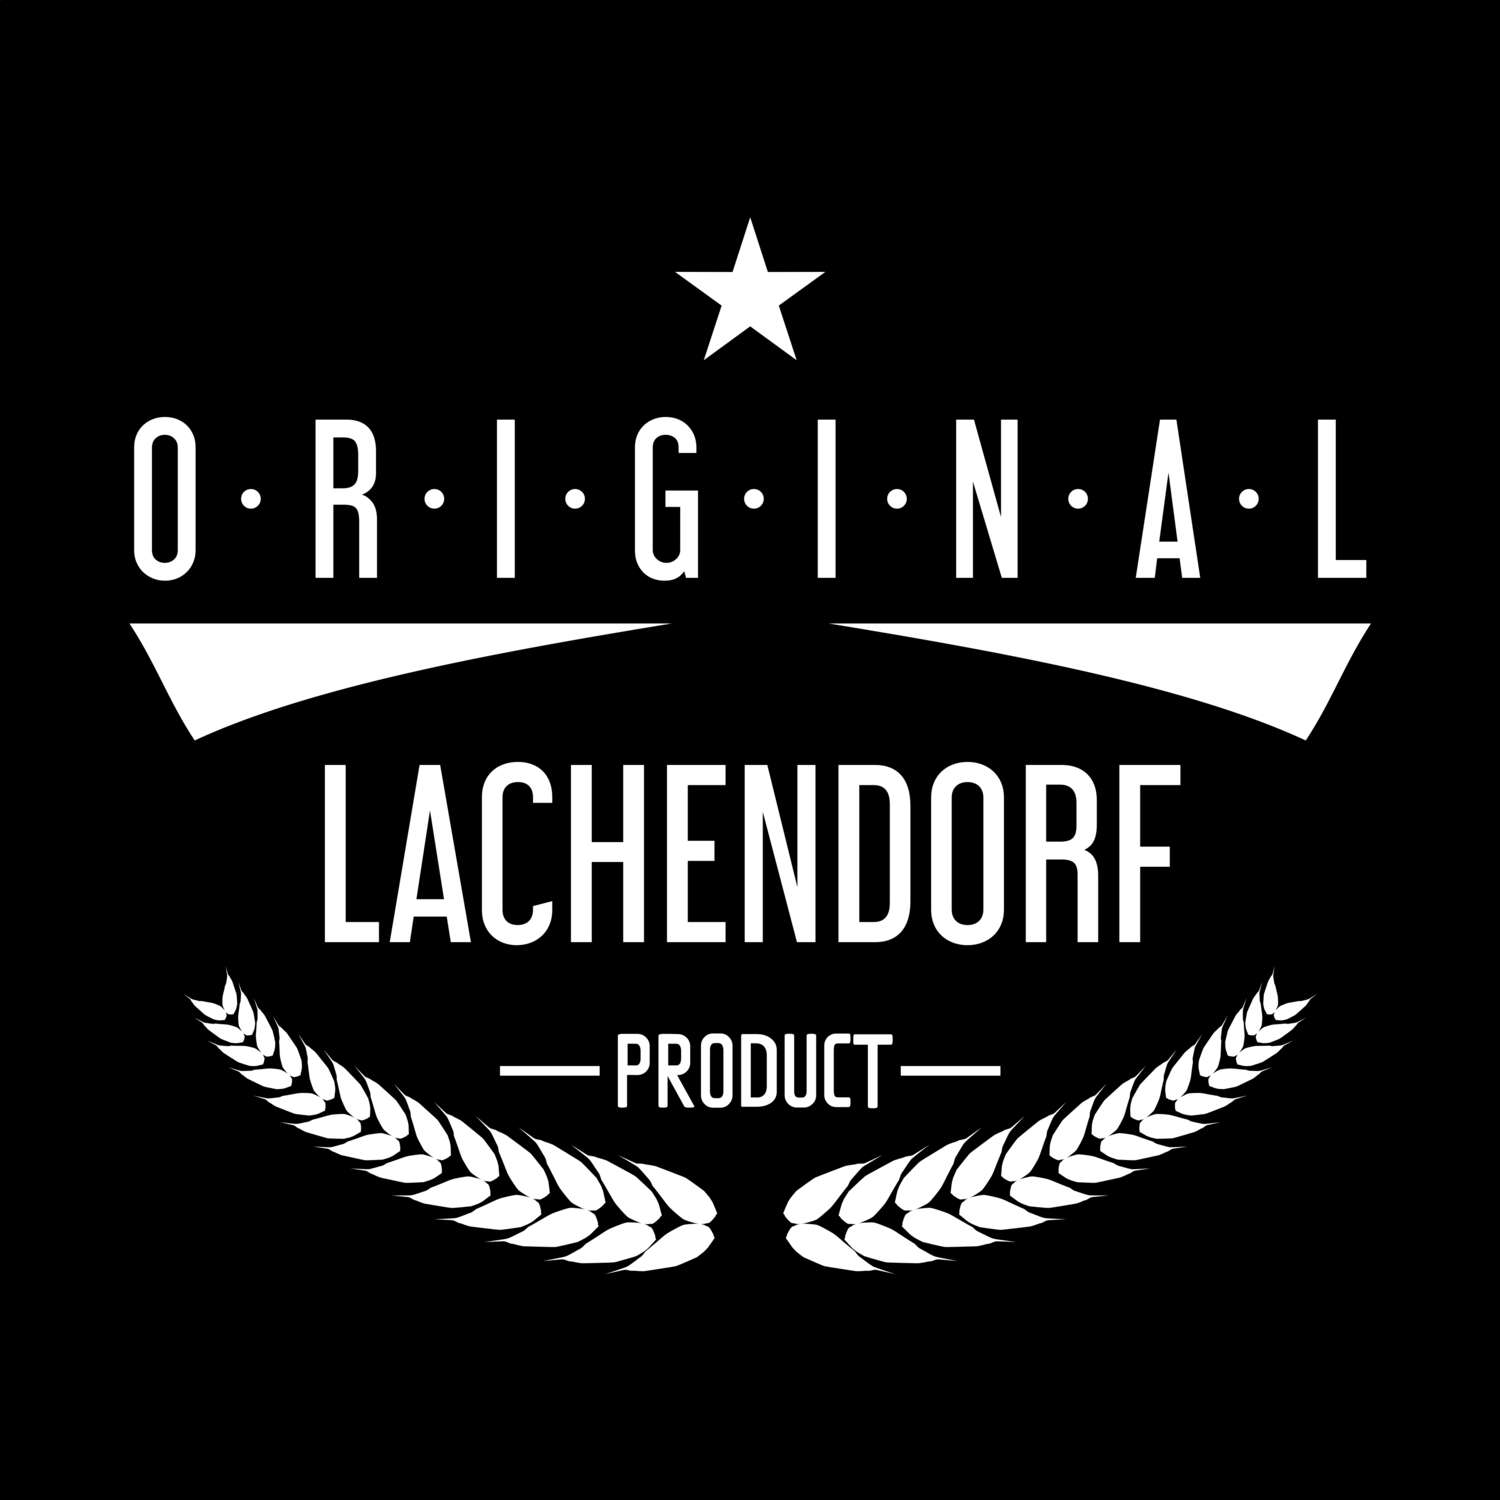 Lachendorf T-Shirt »Original Product«